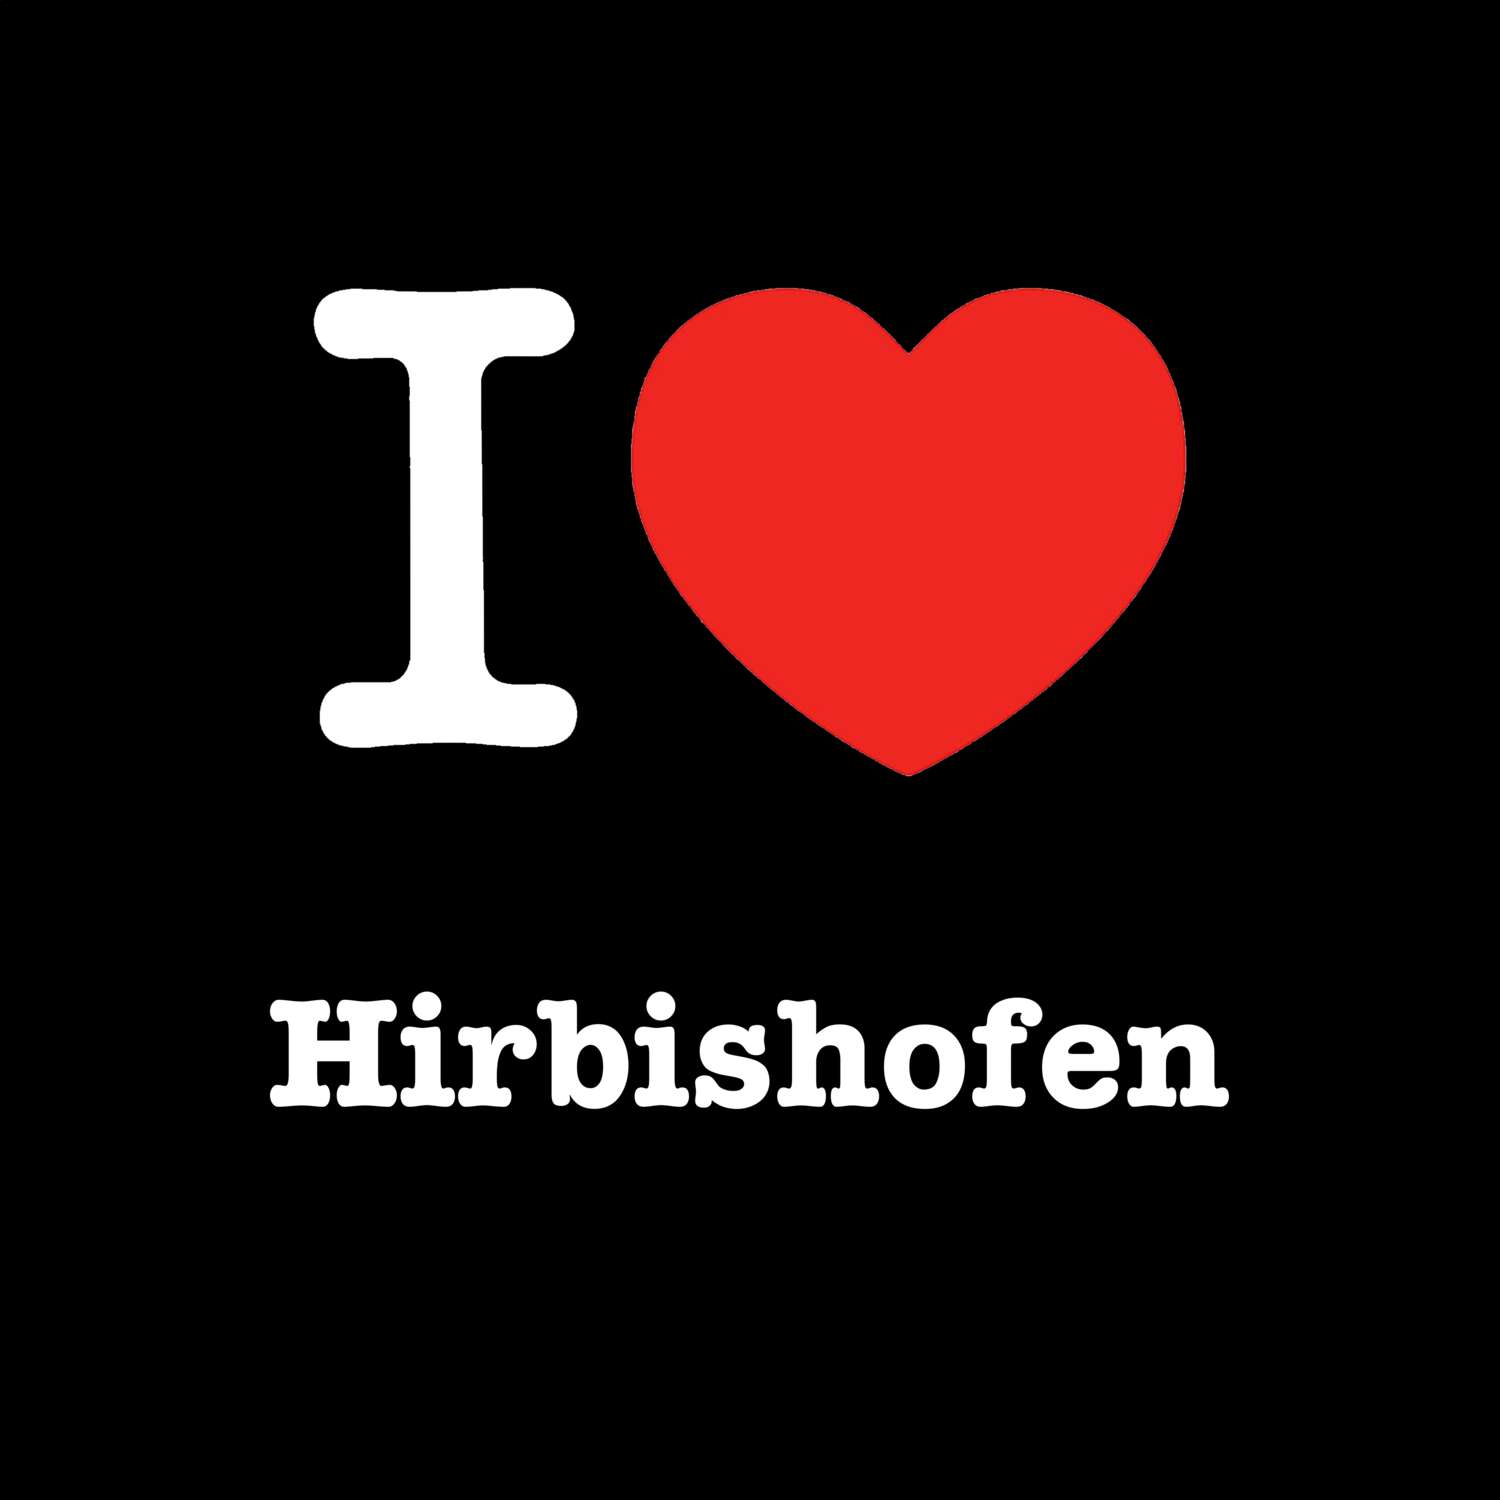 Hirbishofen T-Shirt »I love«